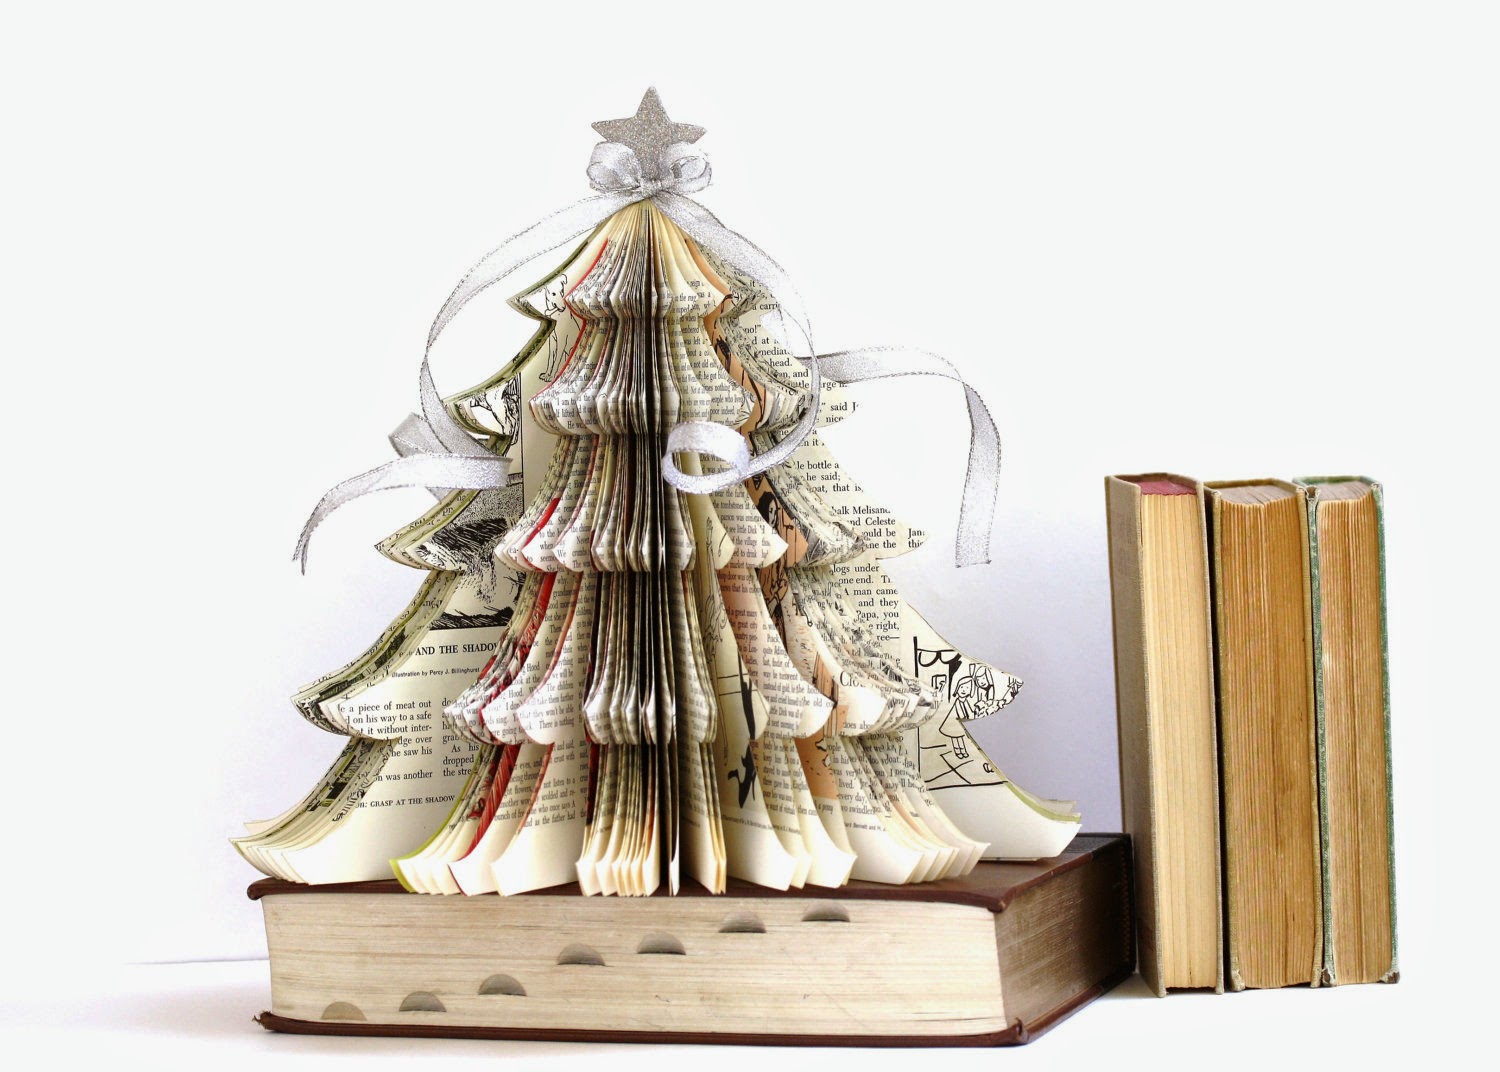 Nuove Poesie Di Natale.Auguri In Poesia I Le Ciaramelle I Pascoli